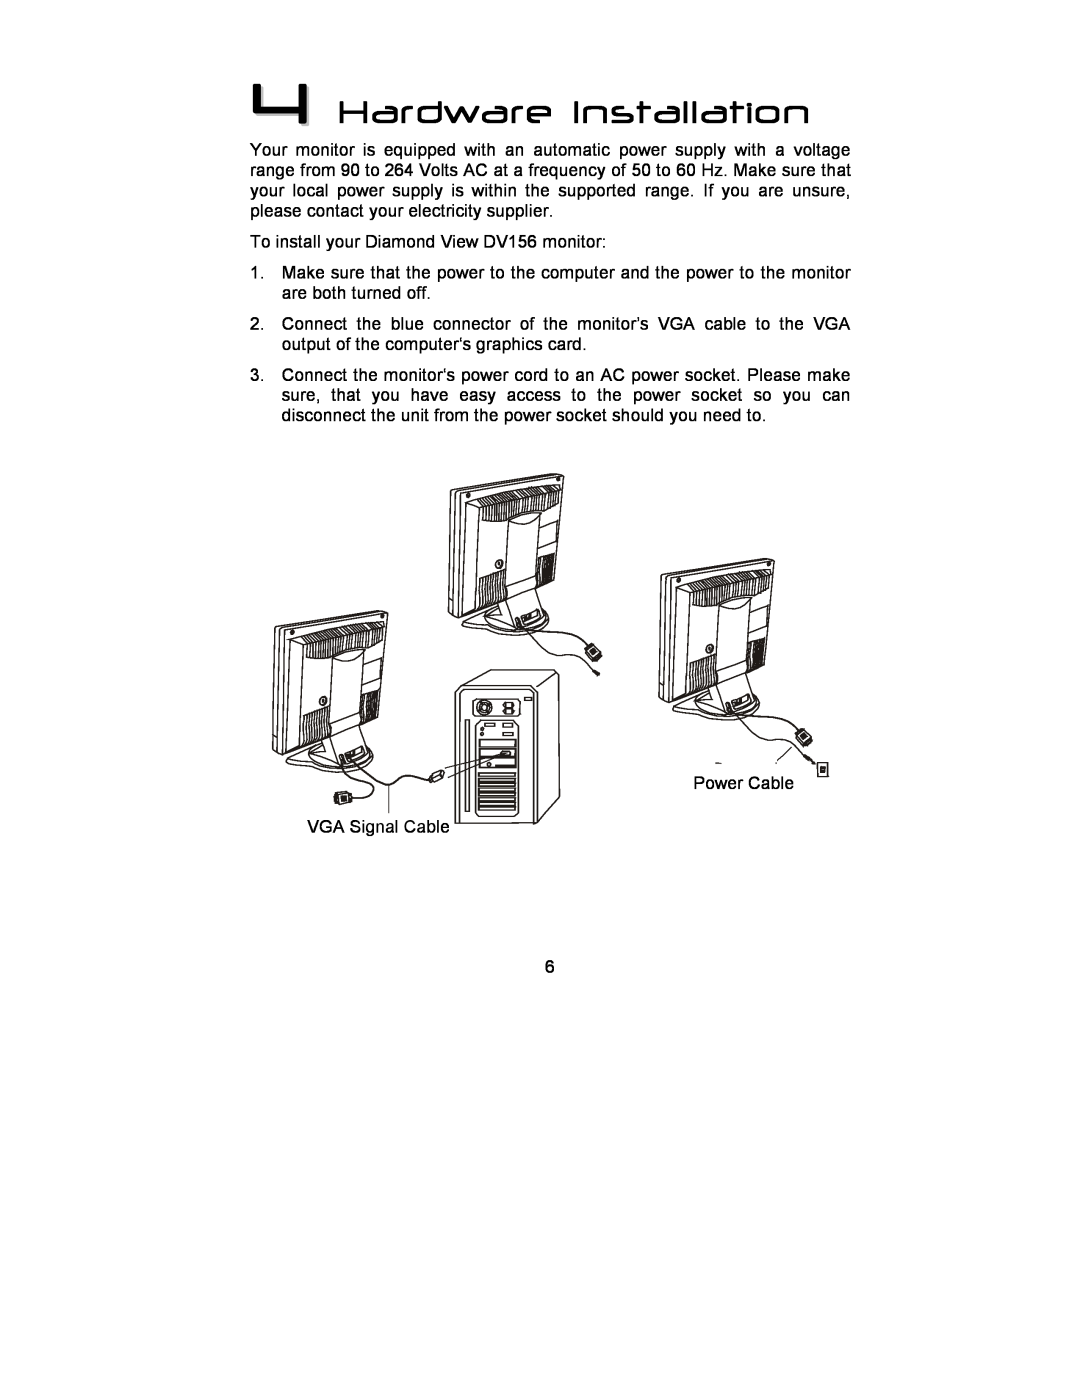 Mitsubishi Electronics DV156 manual Hardware Installation 